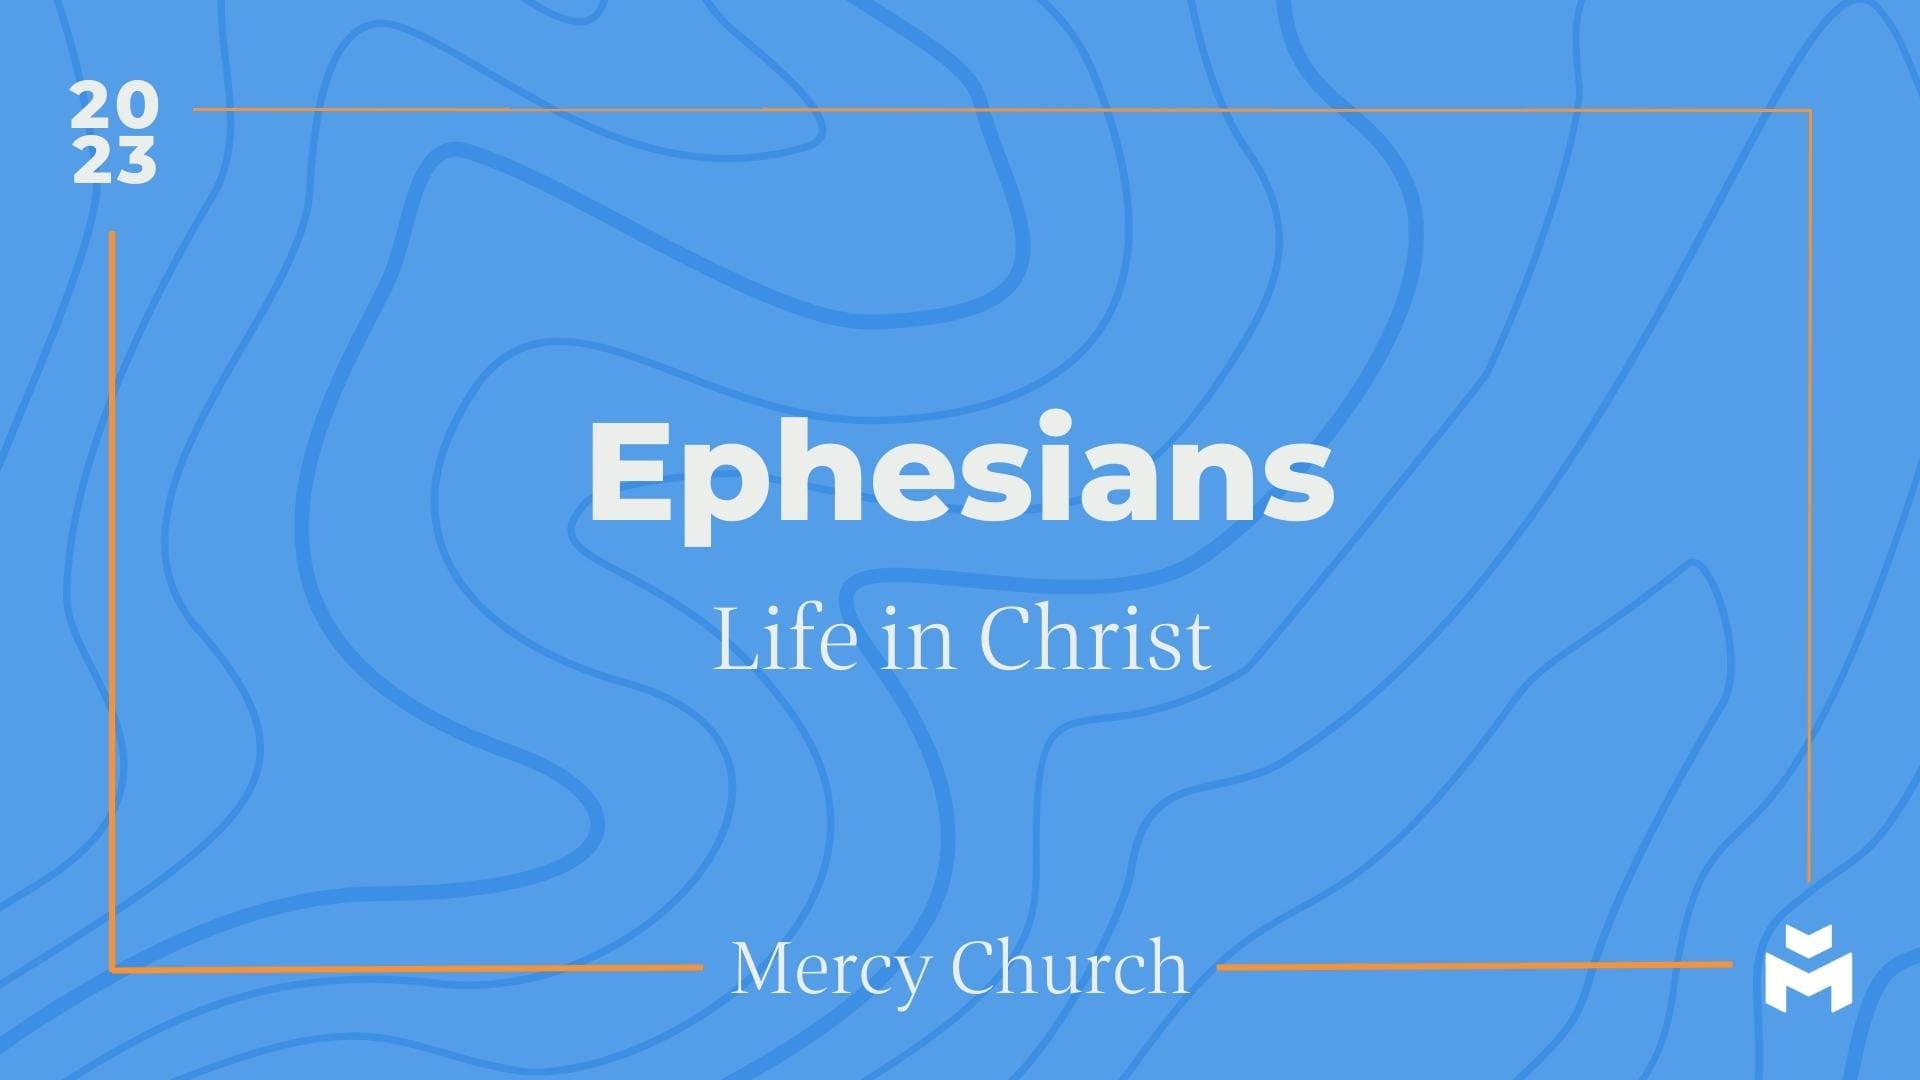 Ephesians: Life in Christ